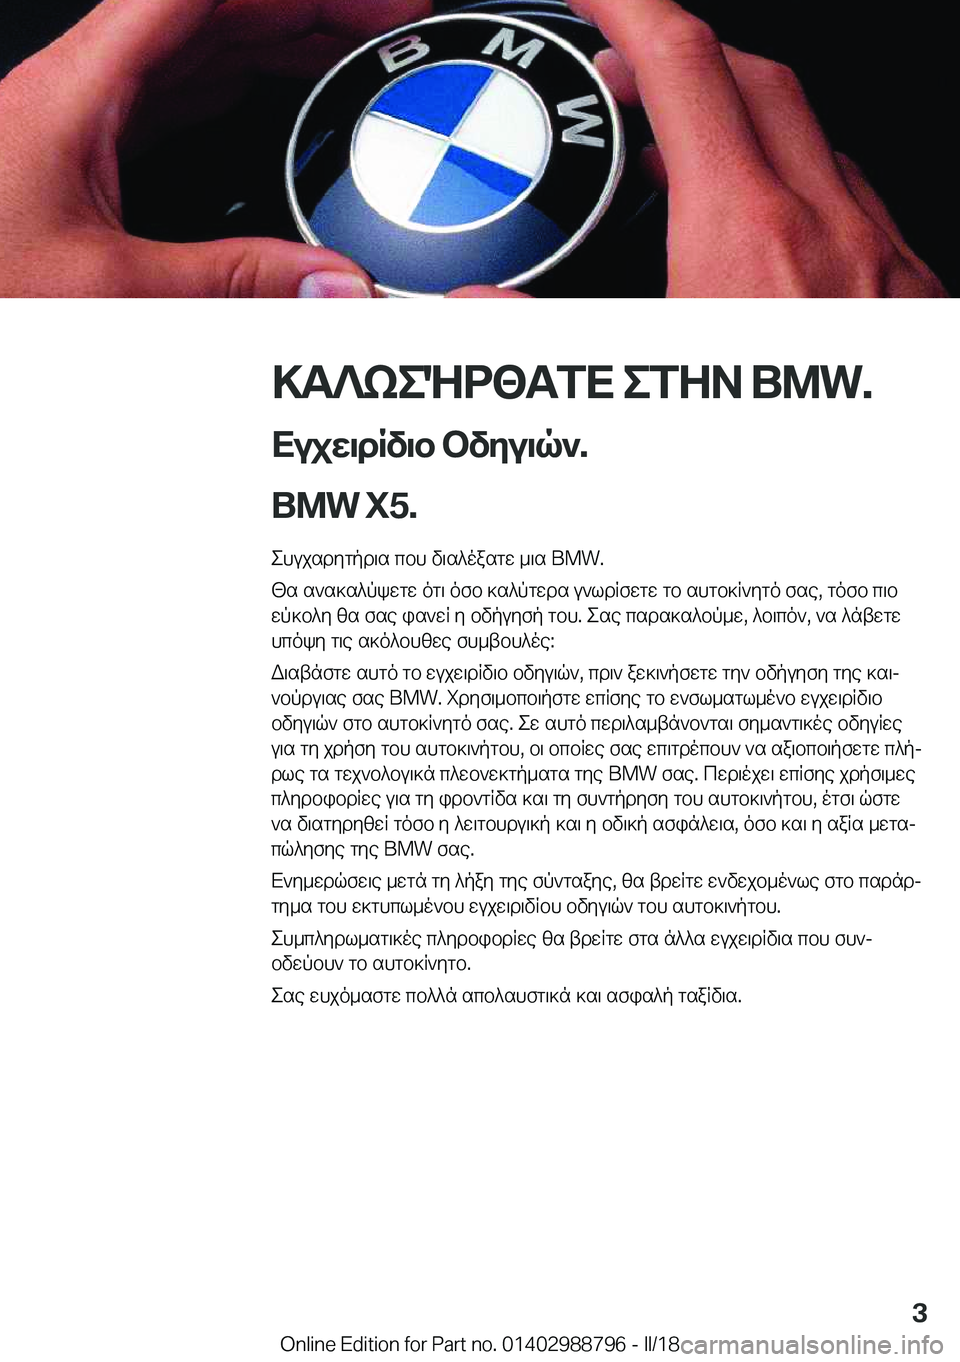 BMW X5 2018  ΟΔΗΓΌΣ ΧΡΉΣΗΣ (in Greek) >T?keNd<TfX�efZA��B�M�W�.
Xujw\dRv\b�bvyu\q`�.
�B�M�W��X�5�.  e h u j s d y g p d \ s�  c b h�  v \ s ^ o a s g w�  _ \ s� �B�M�W�.
 < s�  s ` s ] s ^ p k w g w�  o